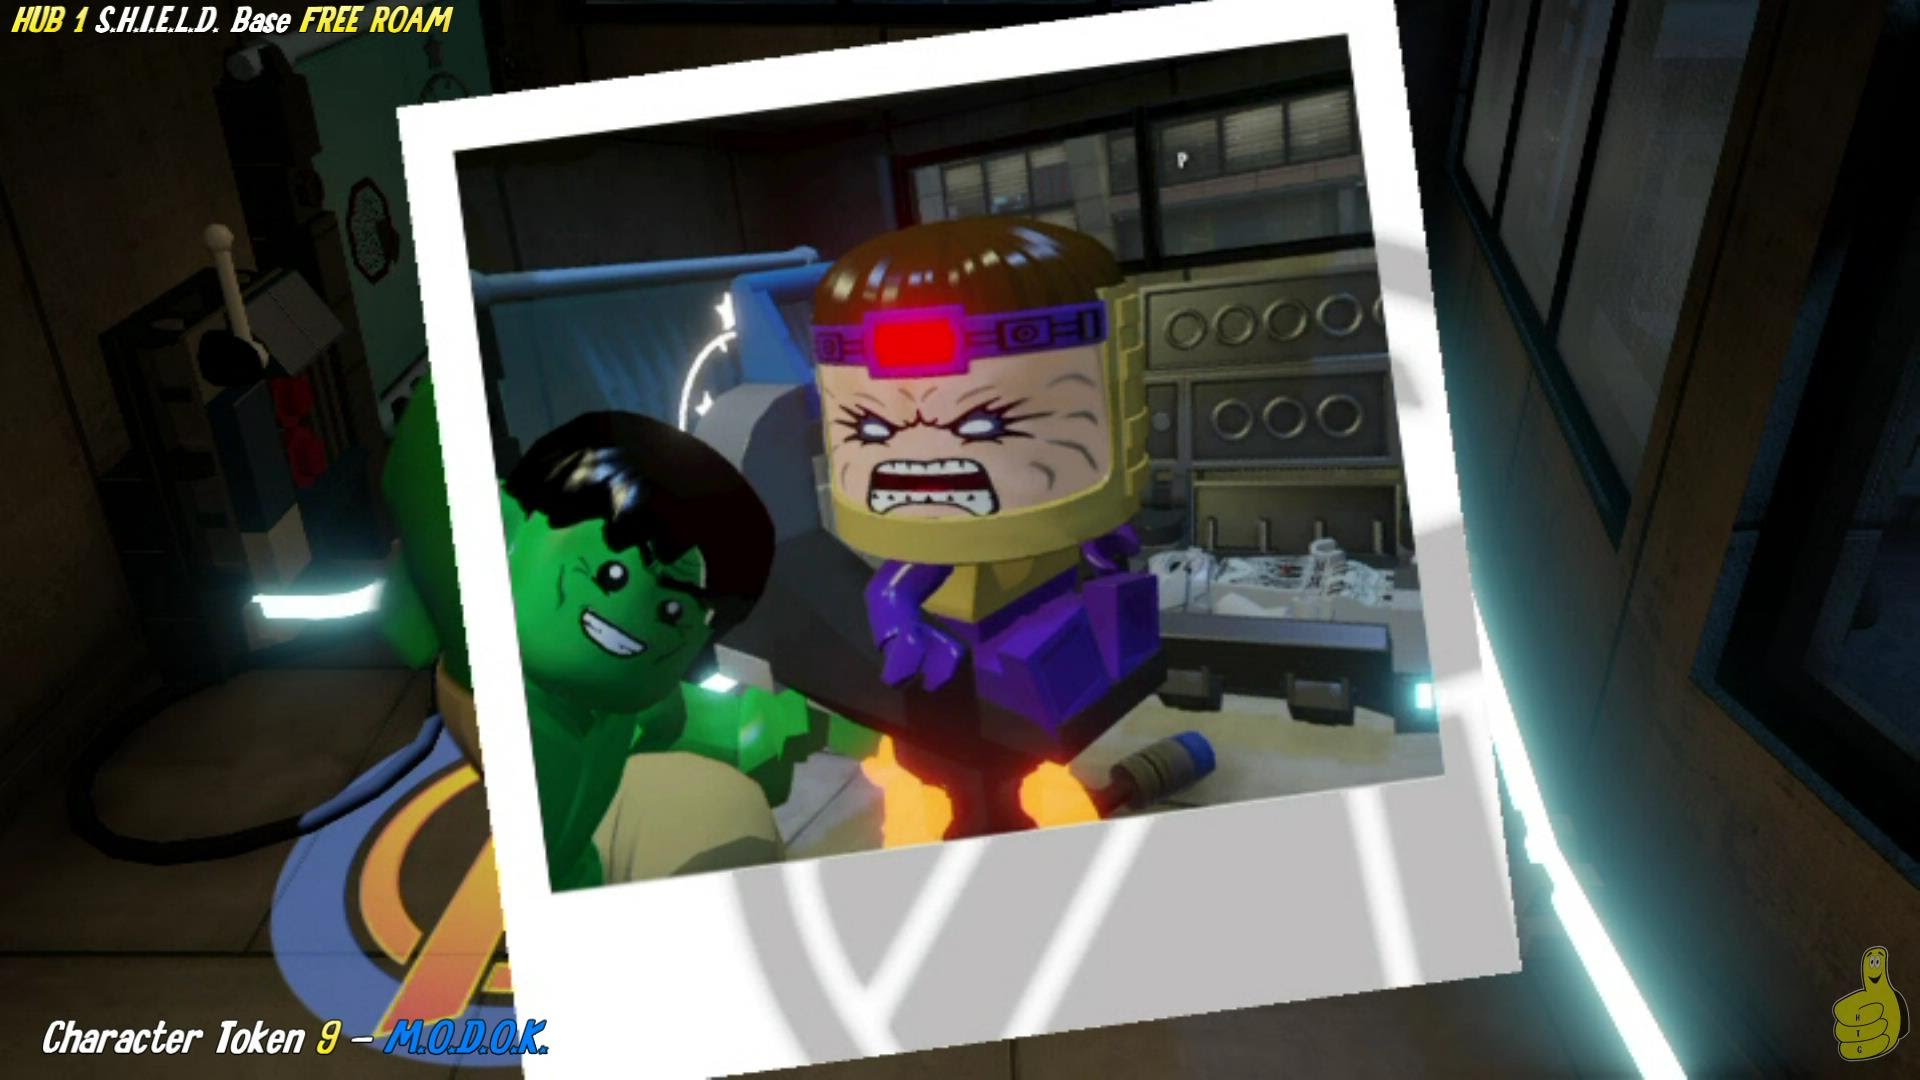 Lego Marvel Avengers: HUB 1 / S.H.I.E.L.D. Base FREE ROAM (All Collectibles) – HTG